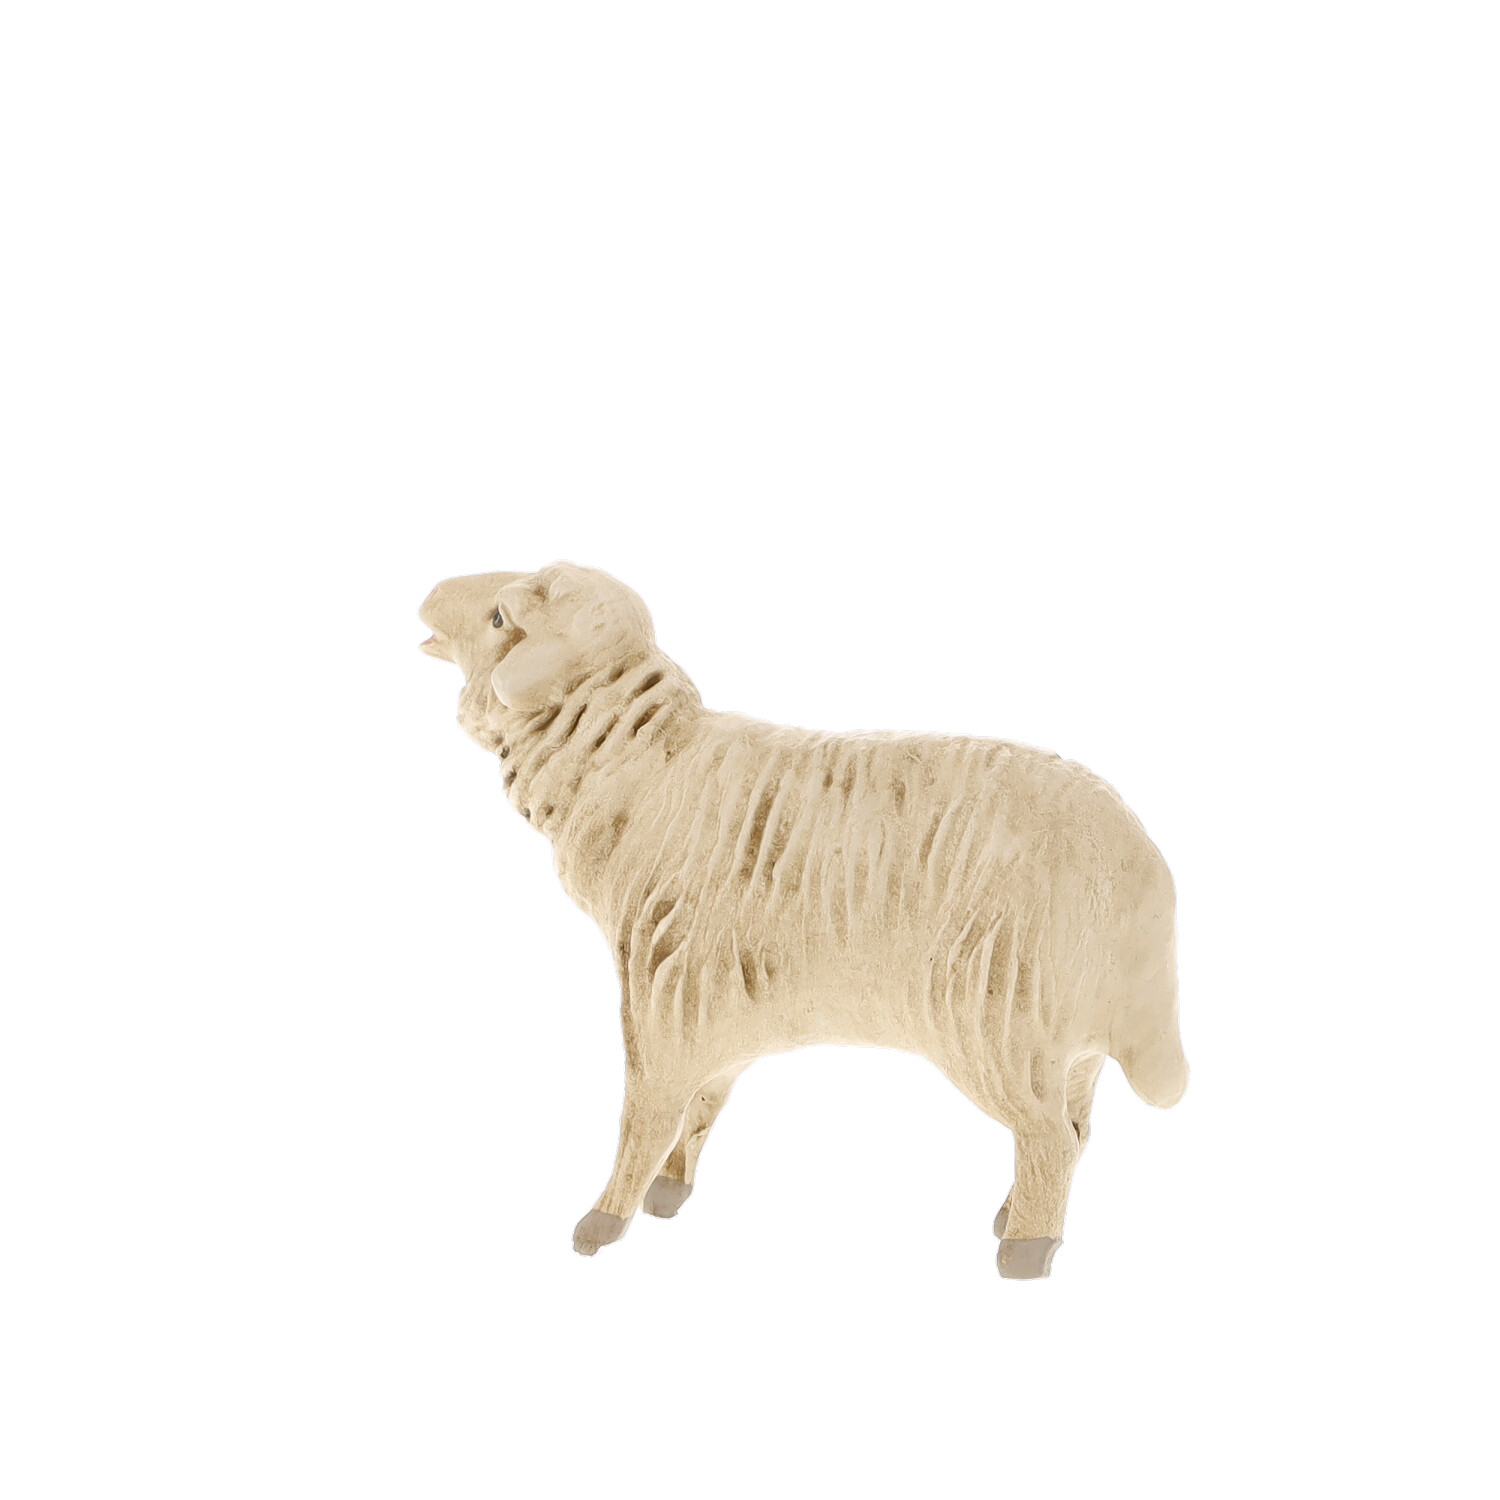 Bleeting sheep - Marolin Nativity figure - made in Germany